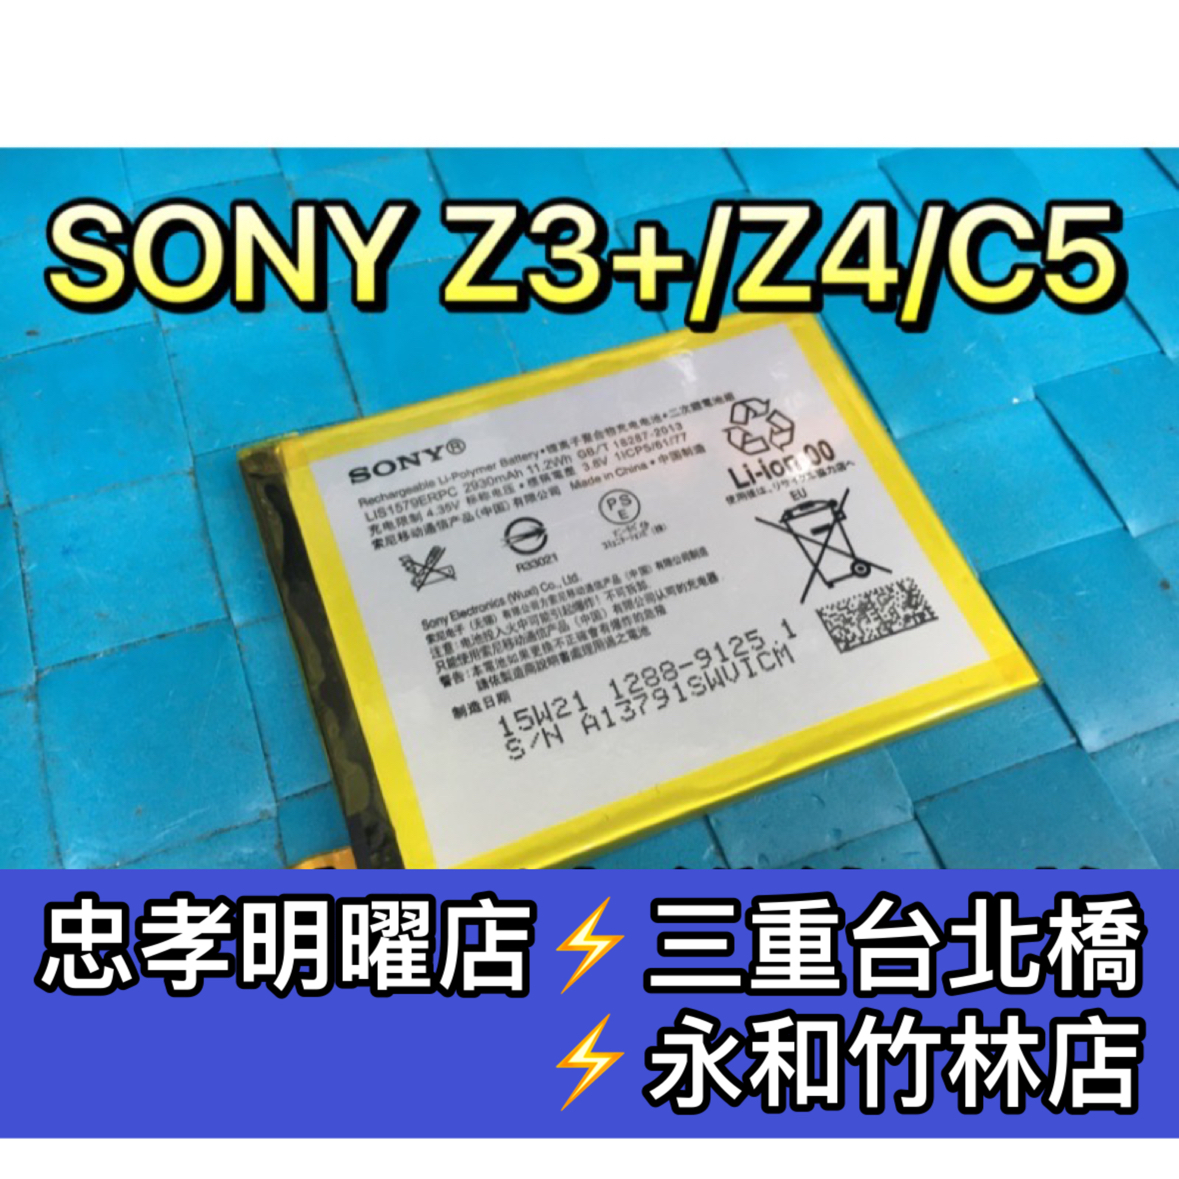 SONY Z3+ Z4 C5 電池 電池維修 電池更換 換電池